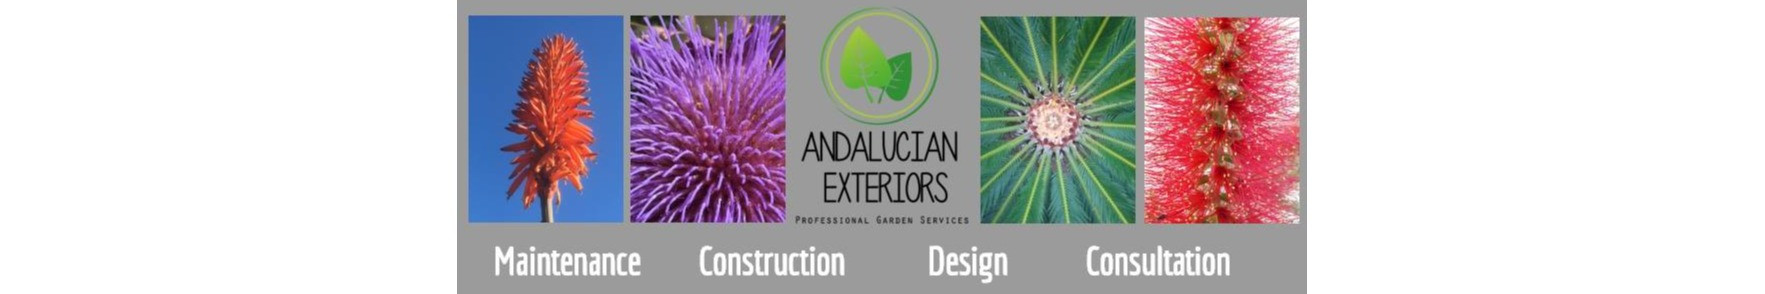 Garden maintenance, design and construction